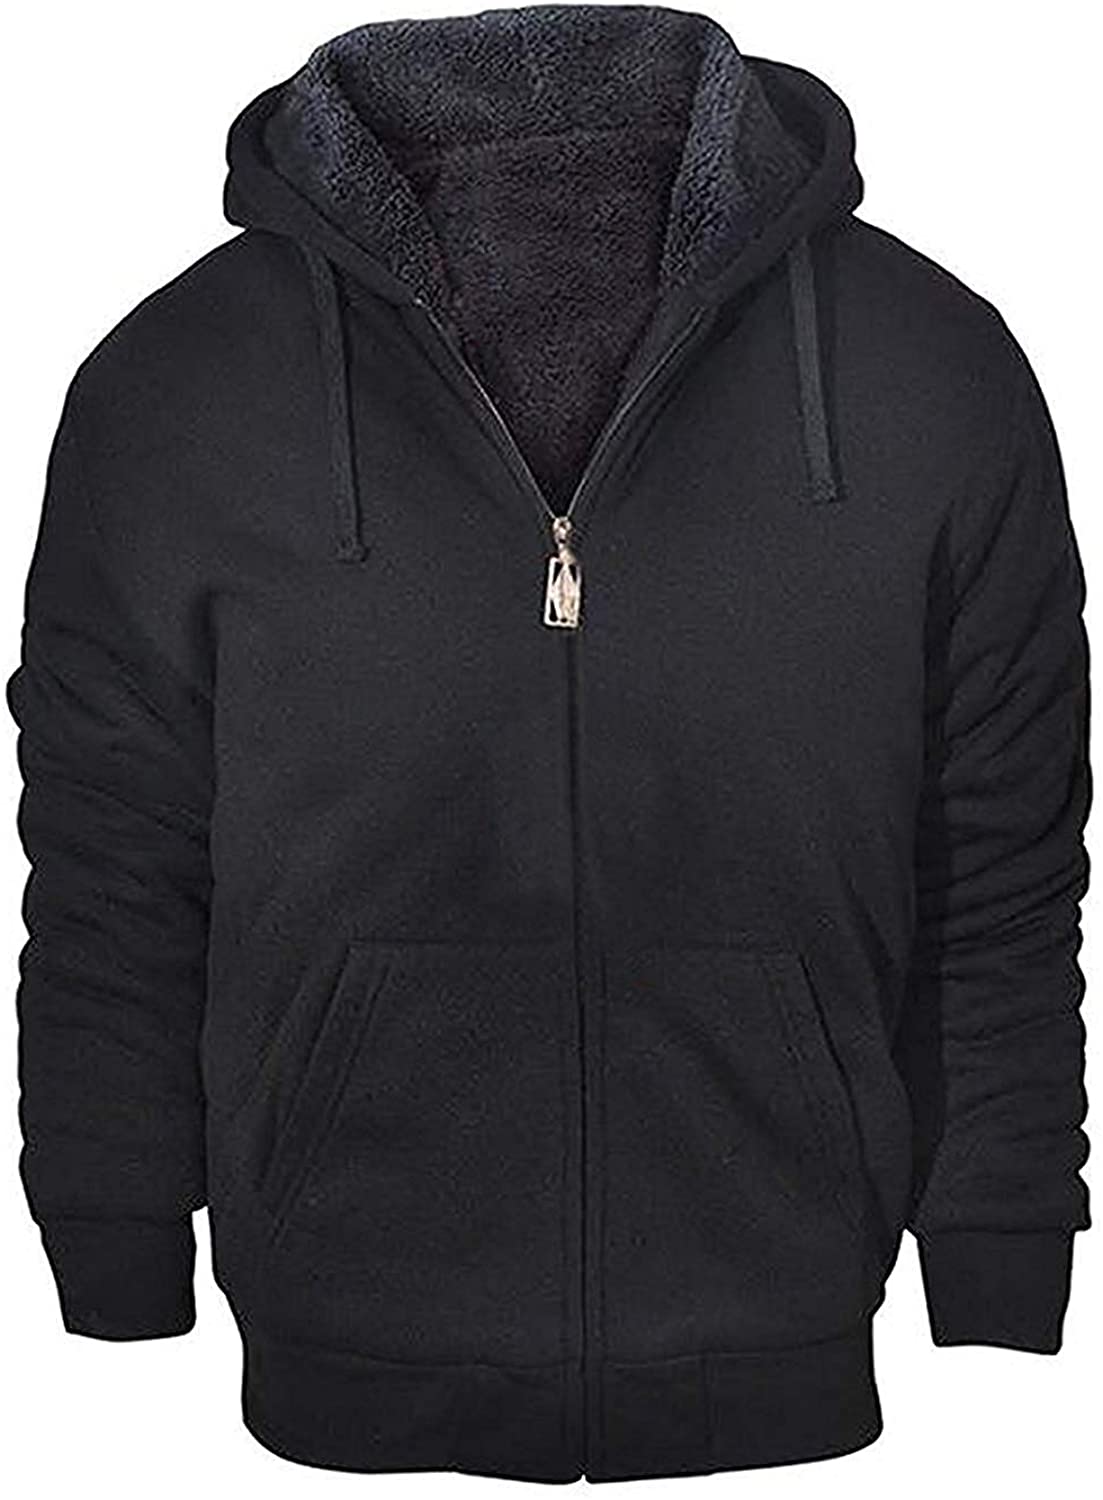 Full Zip Up Thick Sherpa Lined GEEK LIGHTING Hoodies for Men Heavyweight Fleece Sweatshirt